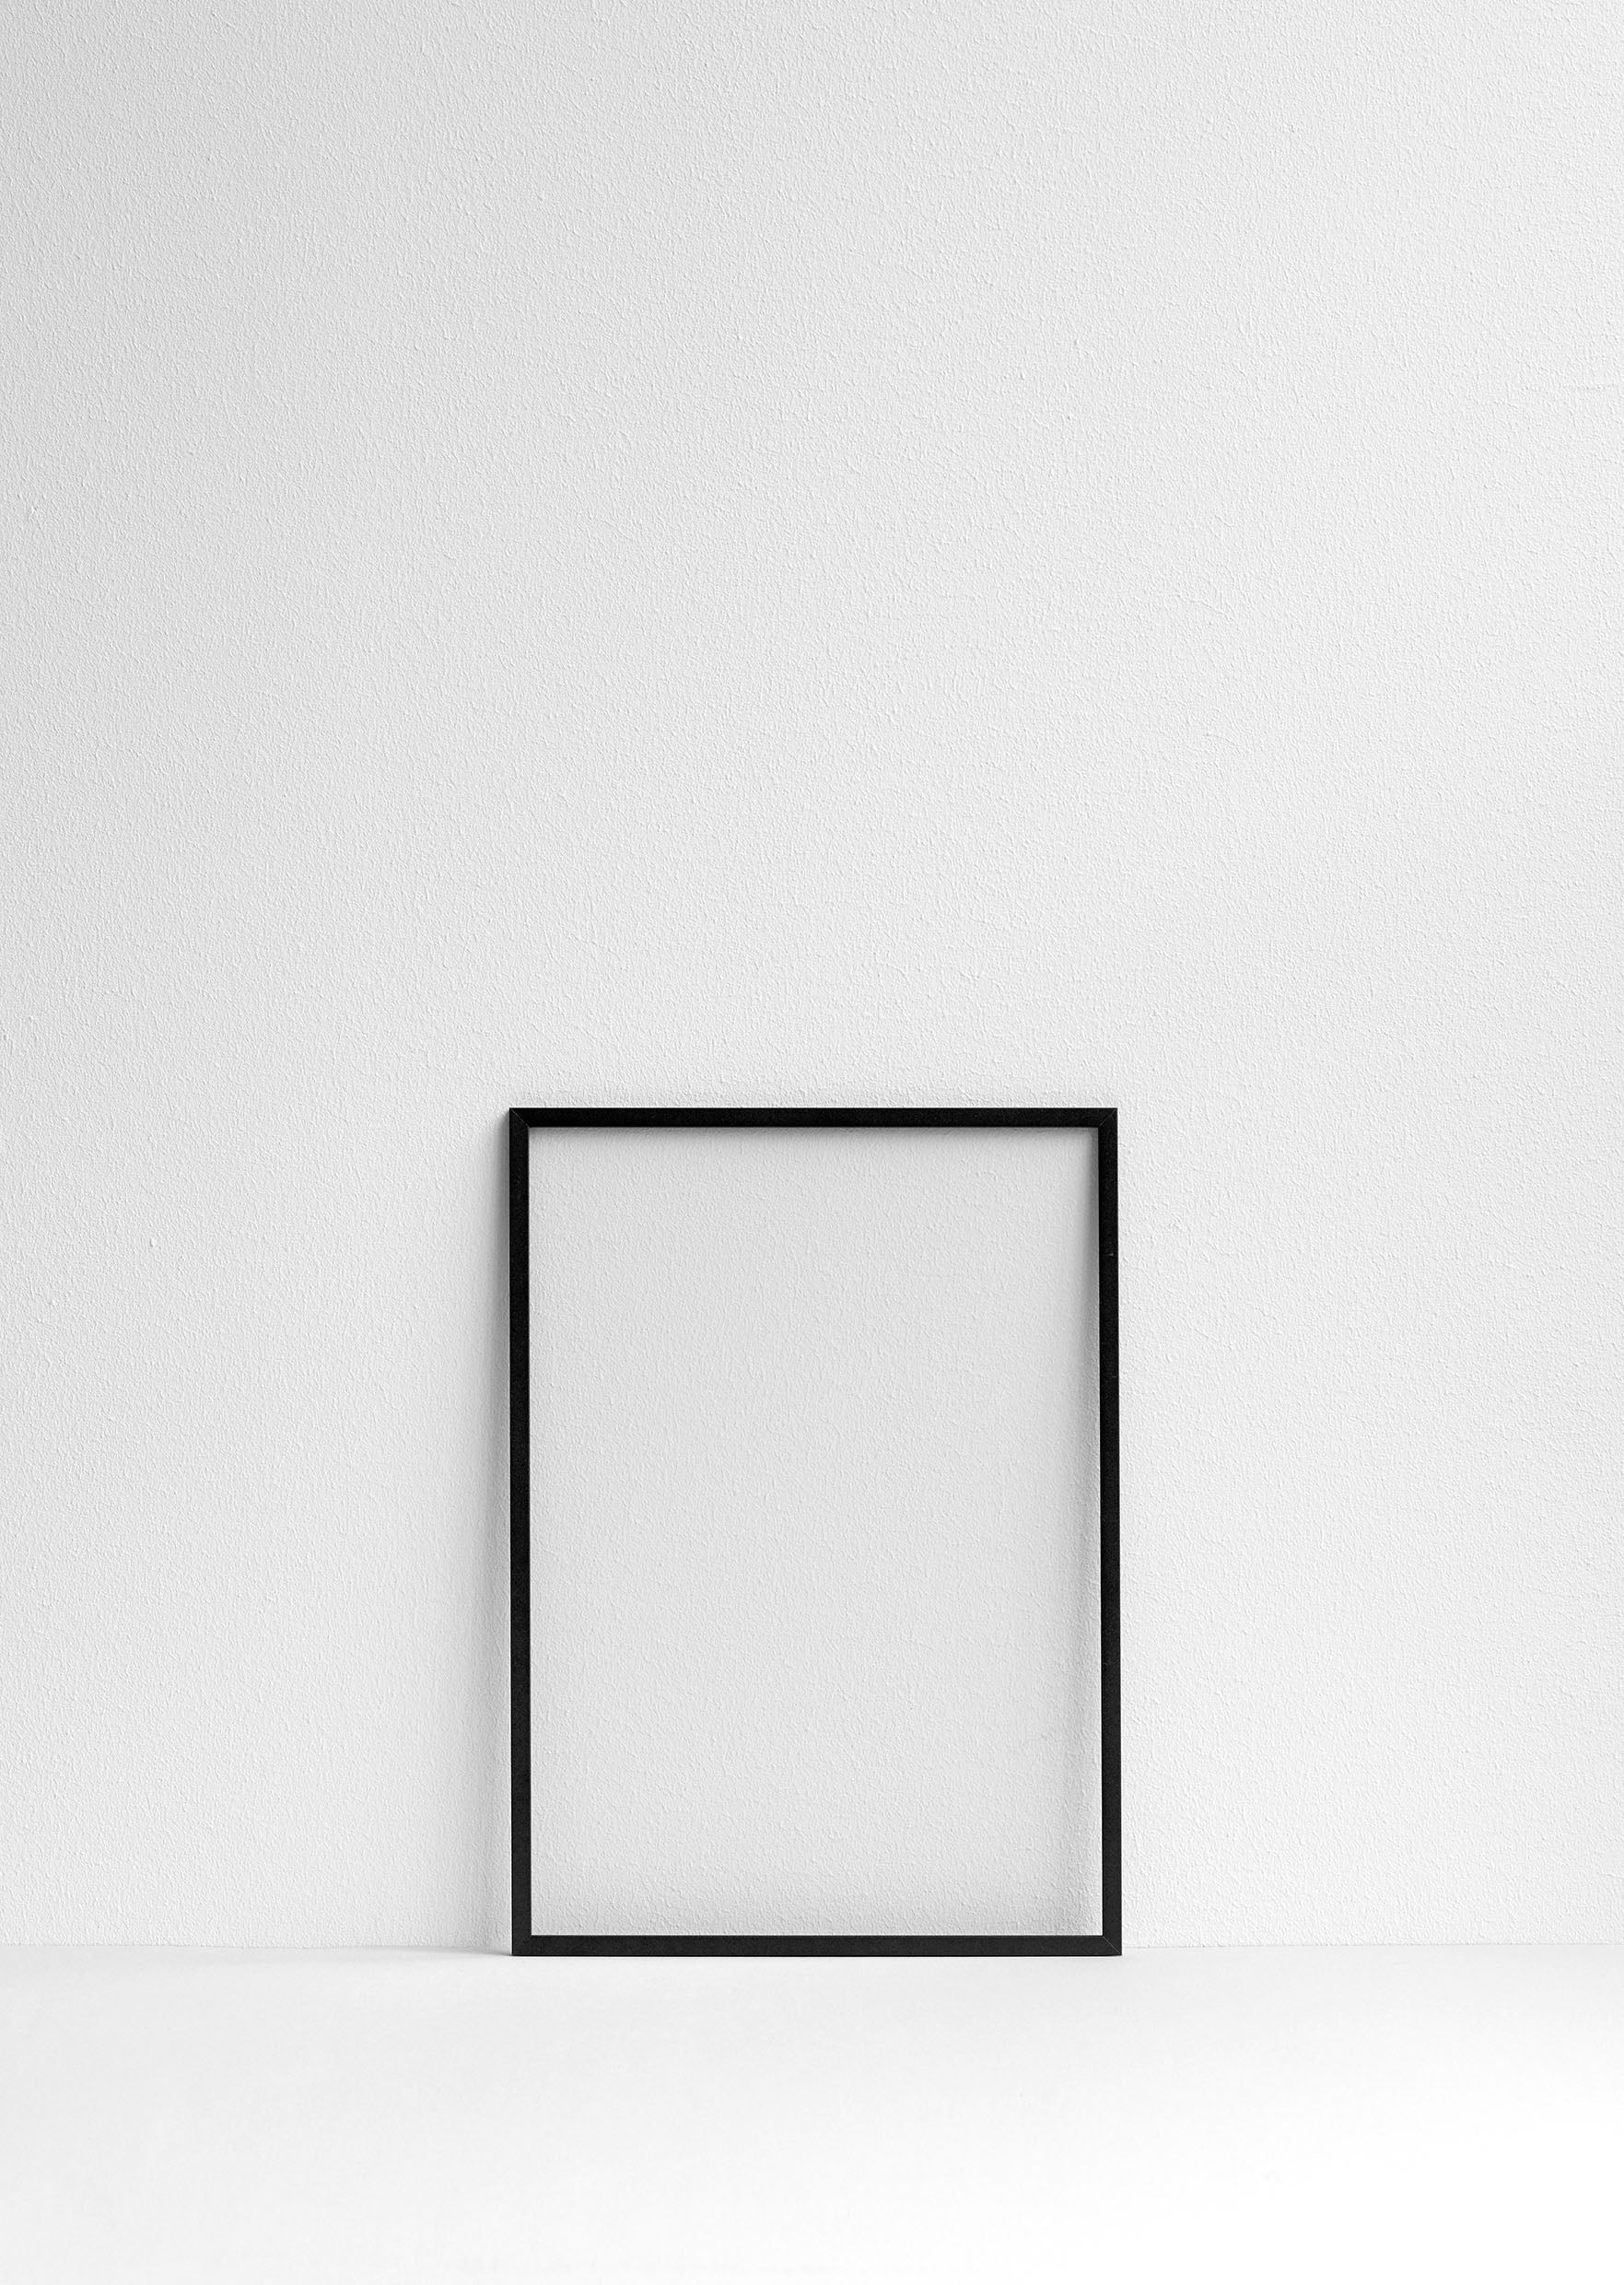 A4 Frame | Powder Coated Black Aluminium | by Moebe - Lifestory - Moebe